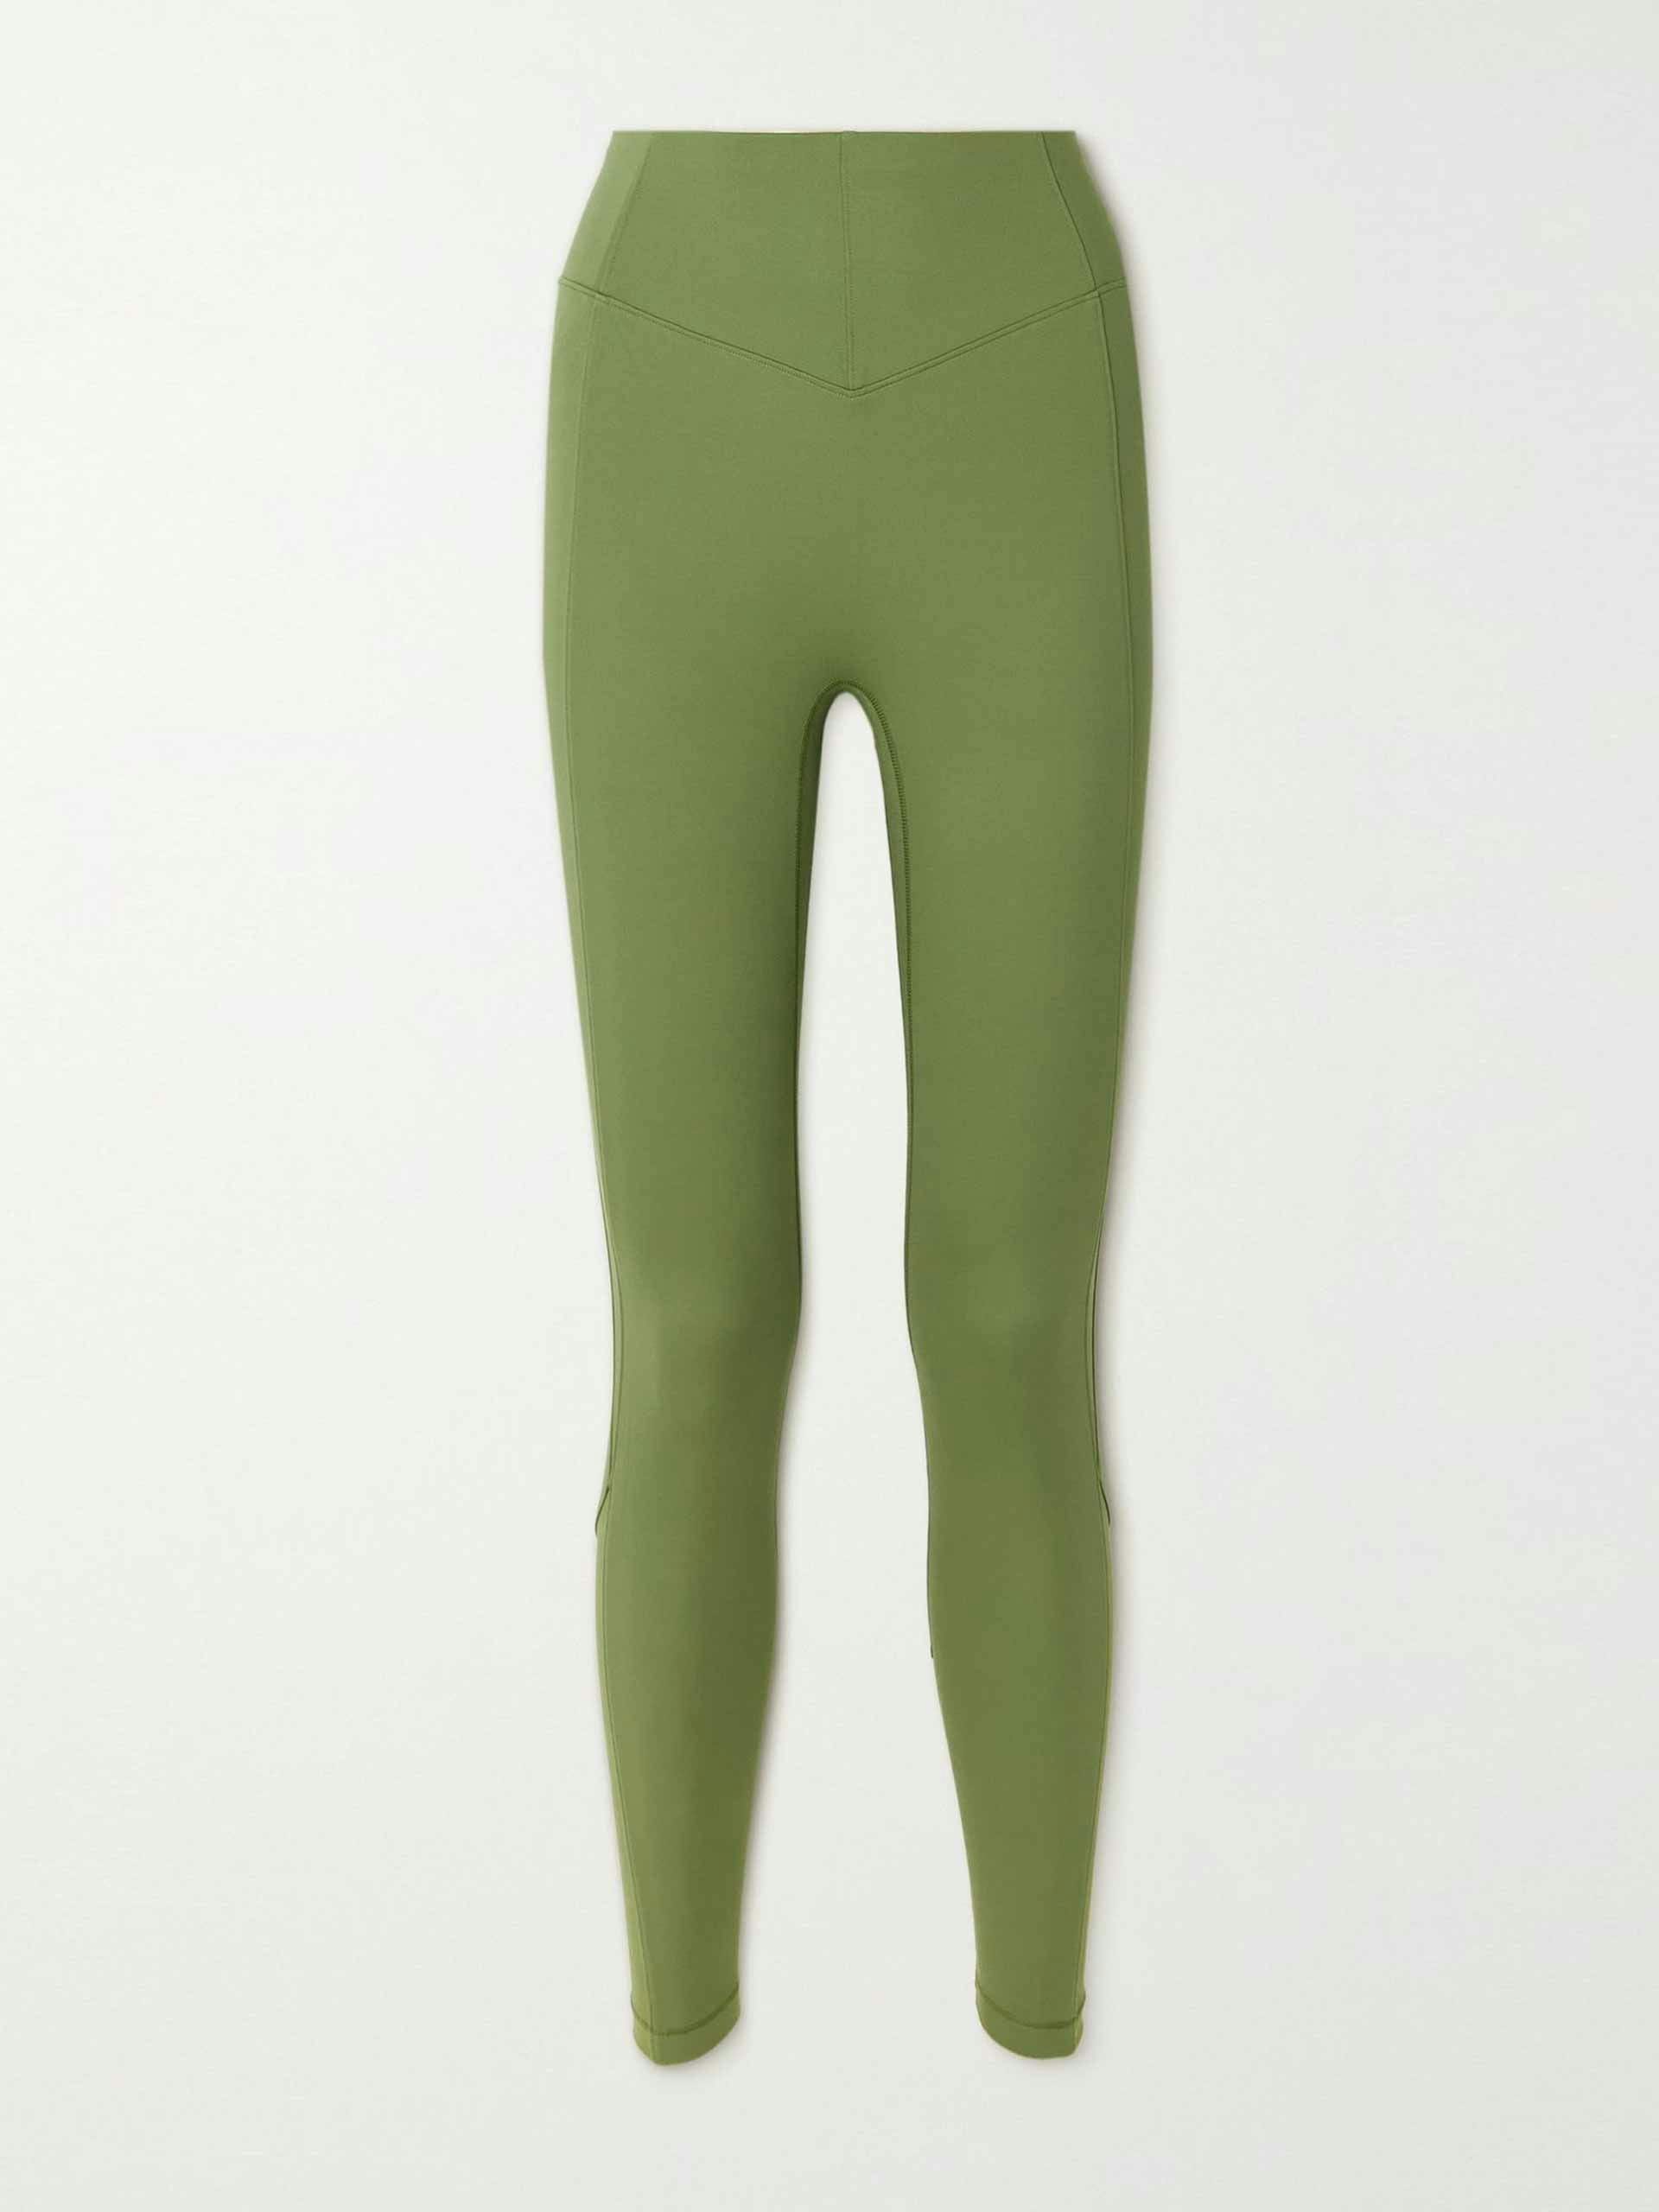 Mesh-paneled recycled stretch leggings